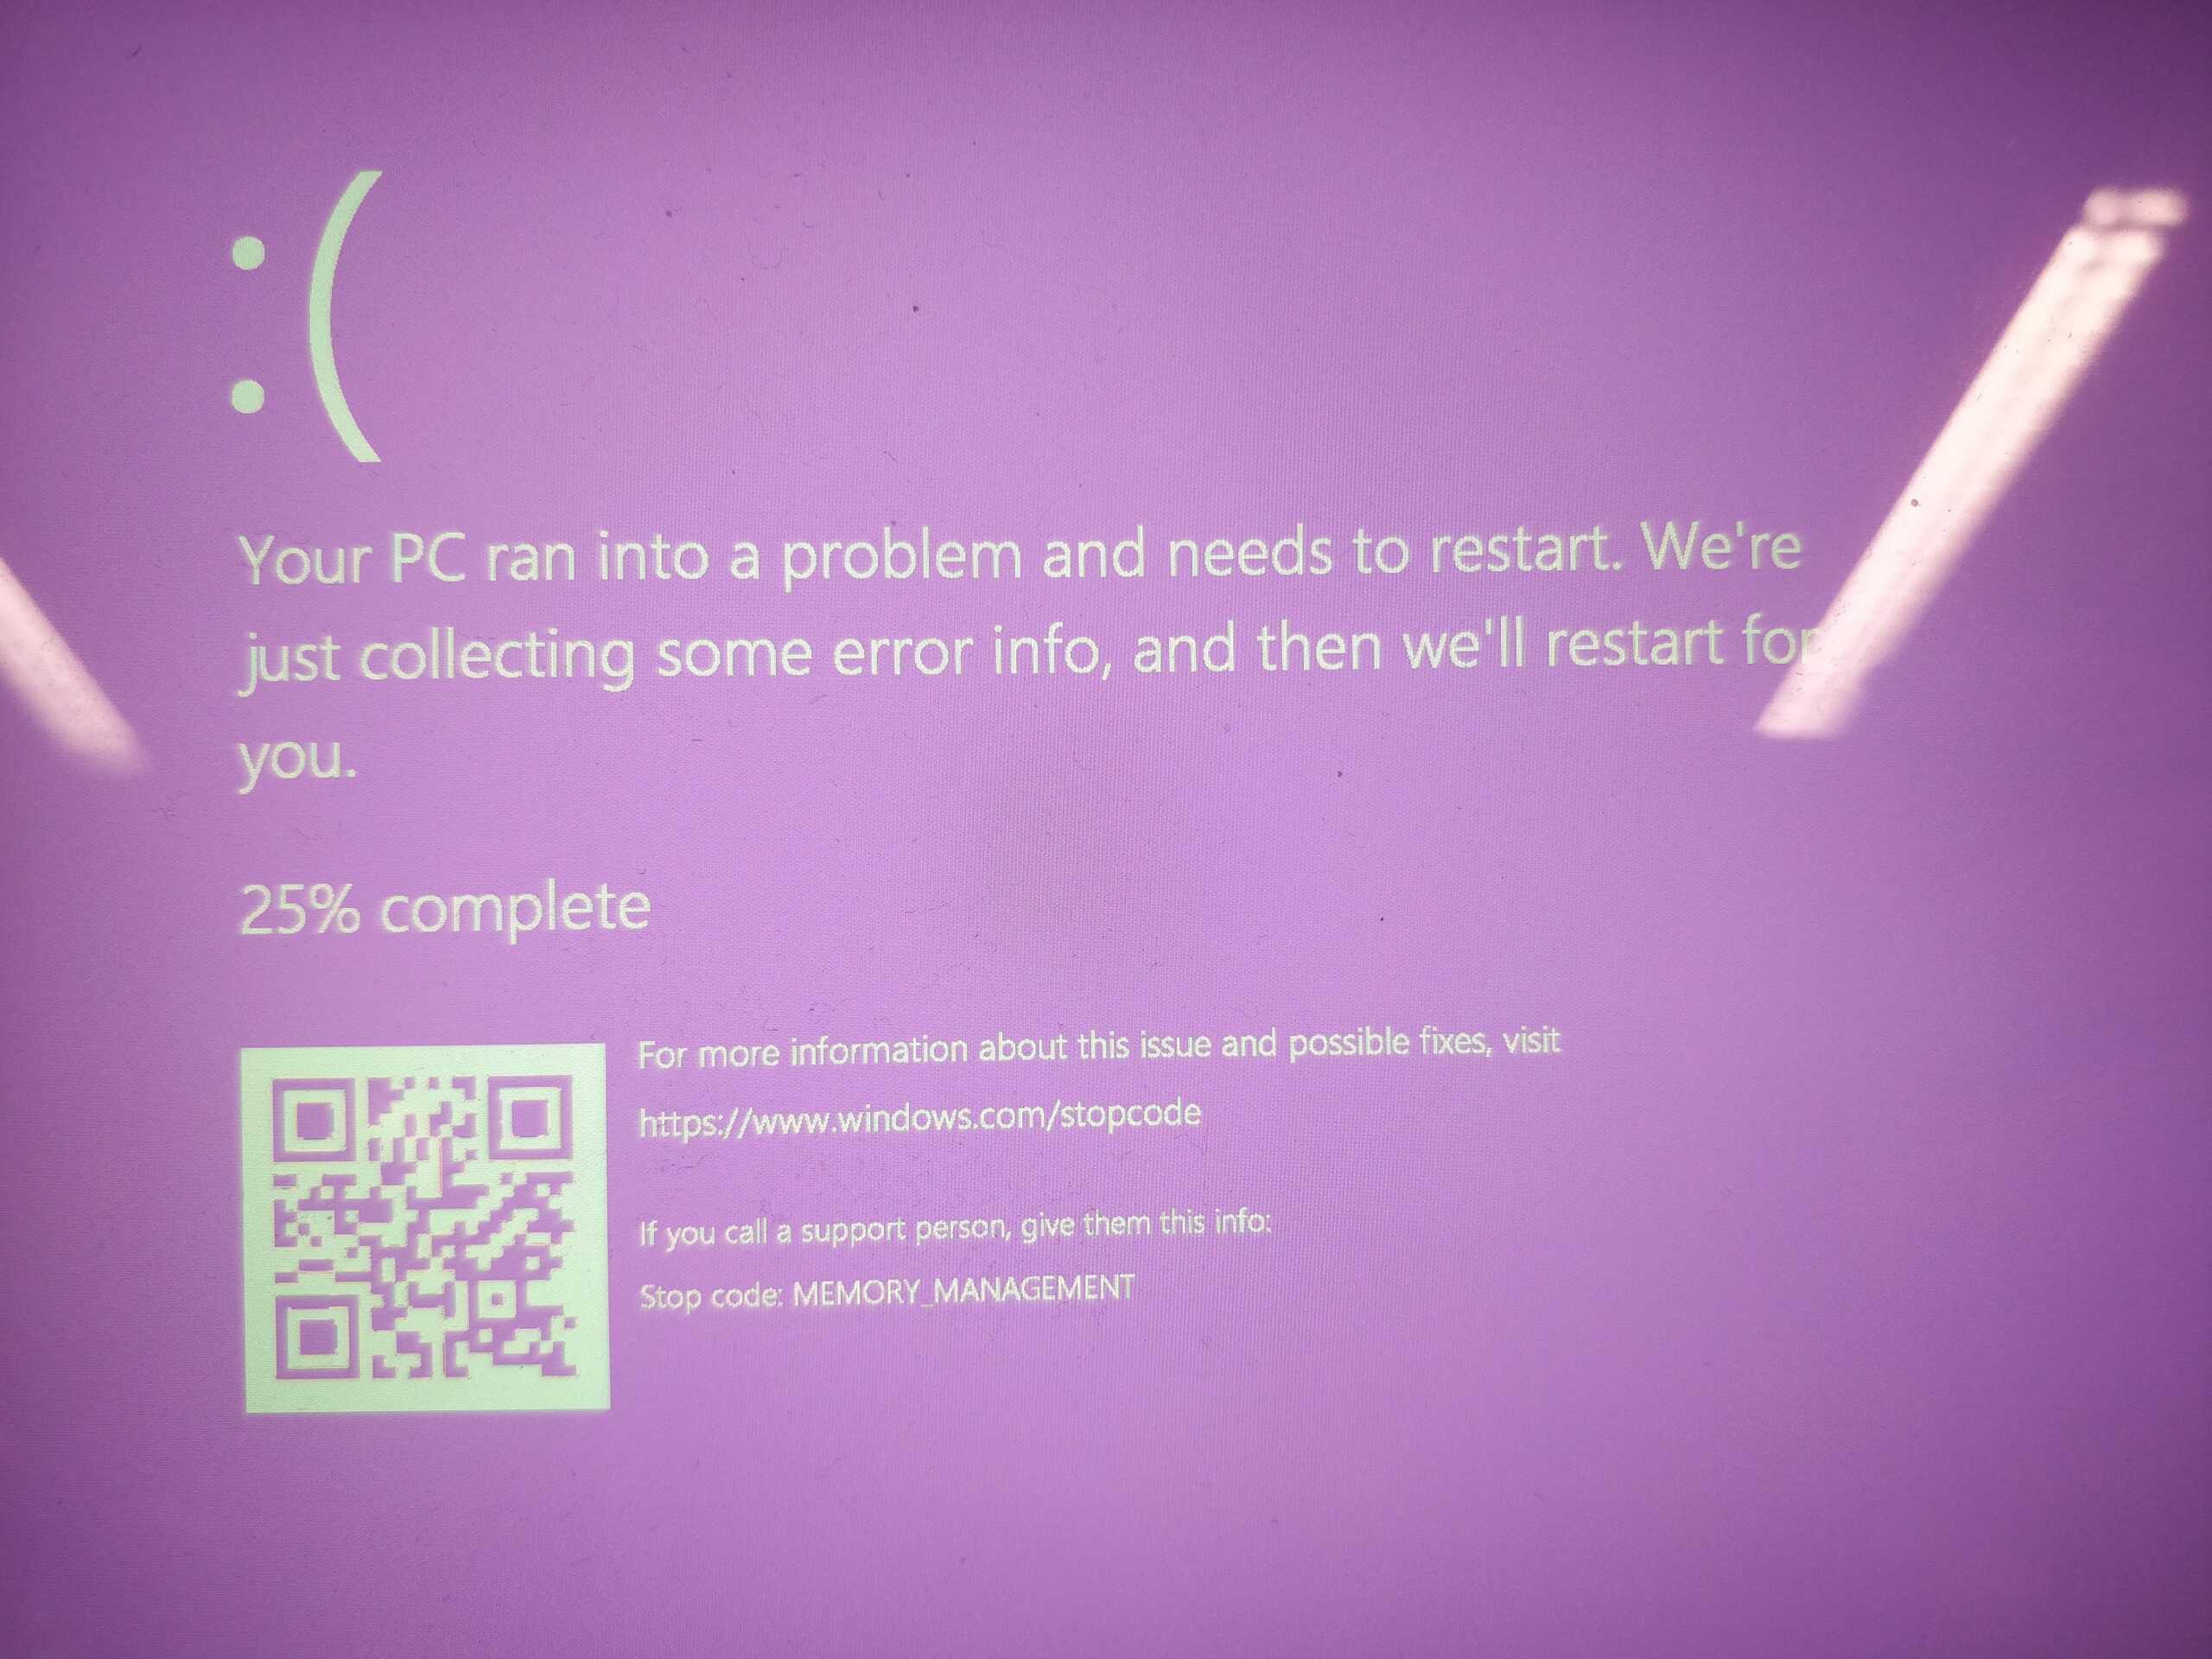 Fix Roblox Blue Screen of Death or BSOD Error in Windows